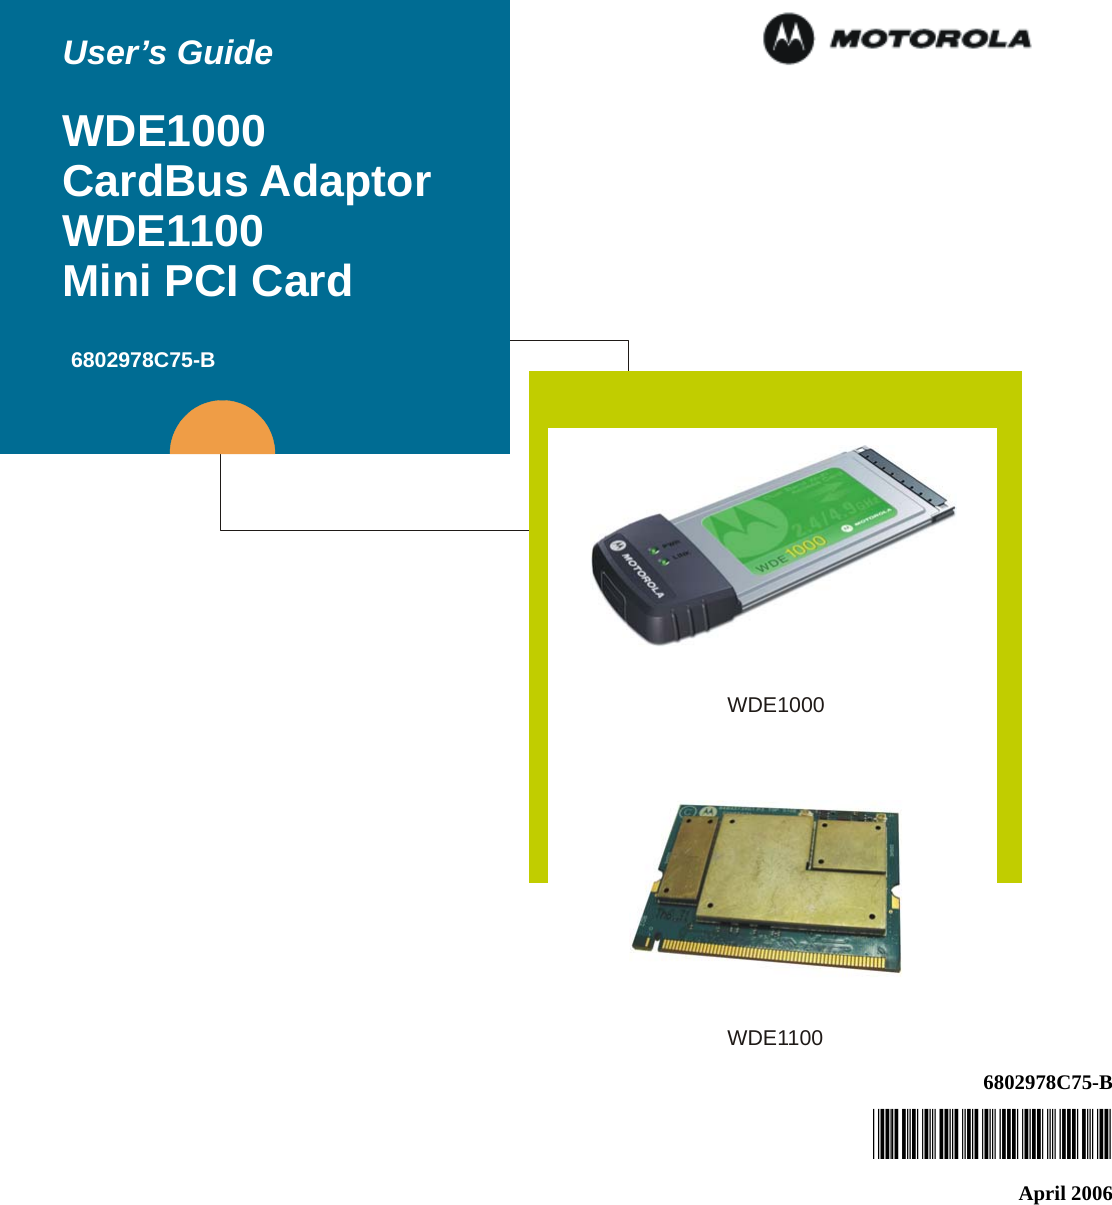 6802978C75-B@6802978C75@April 2006User’s GuideWDE1000CardBus AdaptorWDE1100Mini PCI Card6802978C75-BWDE1000WDE1100